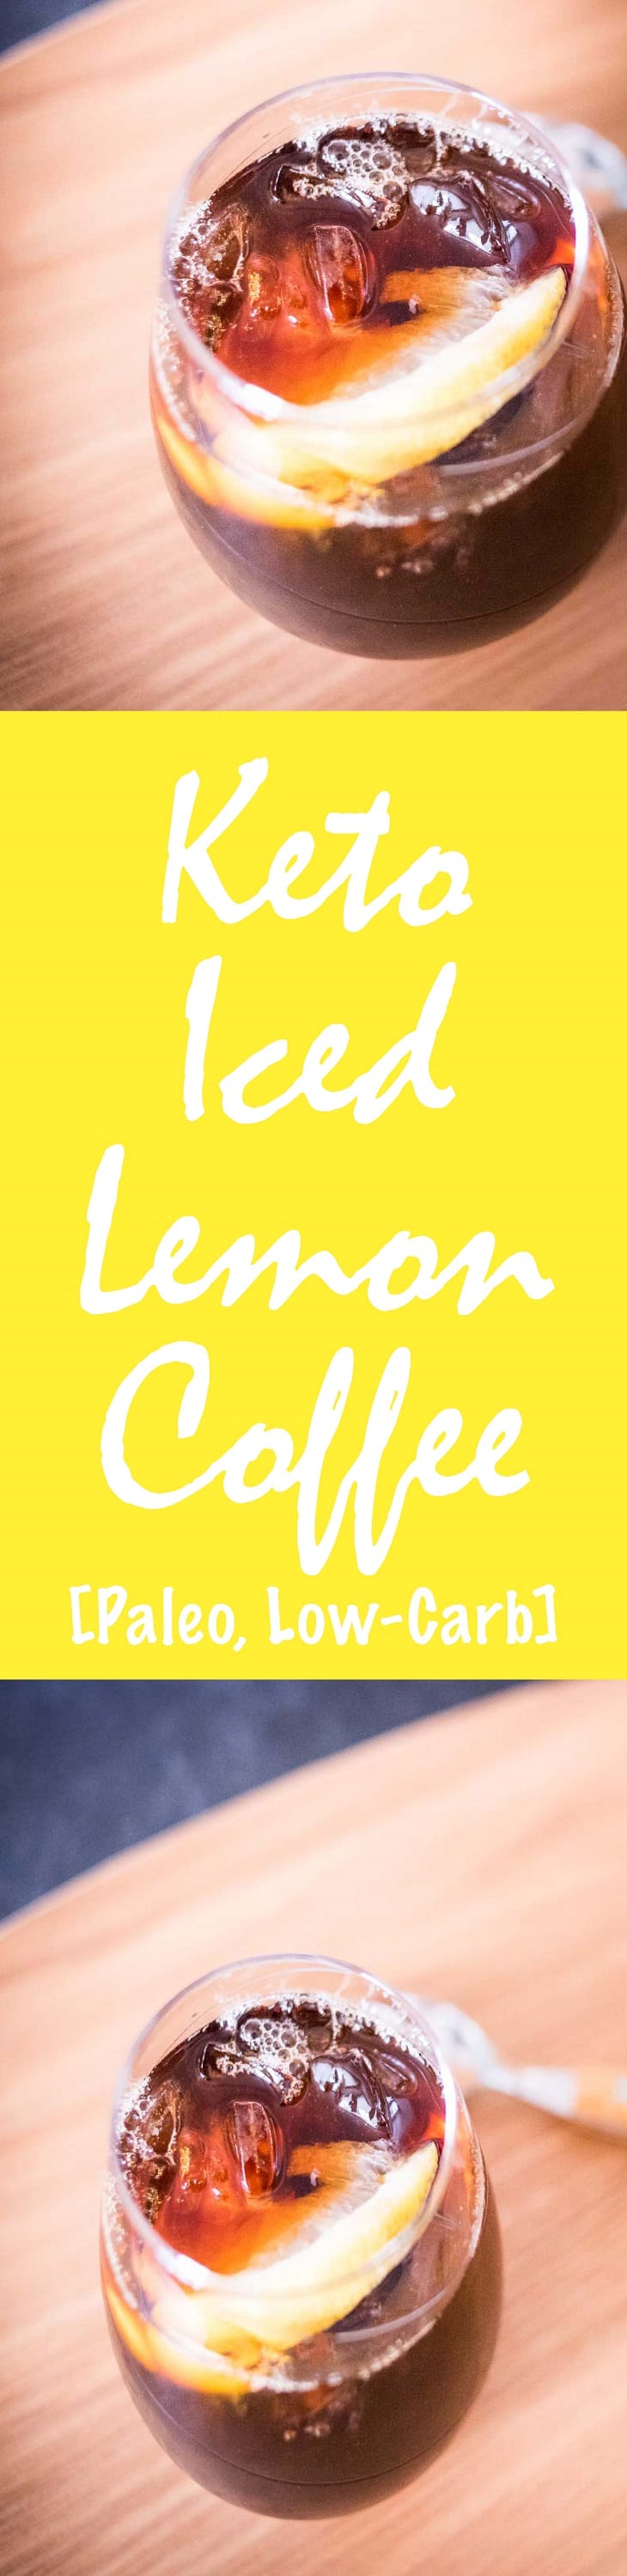 Keto Iced Lemon Coffee Recipe [Paleo, Low-Carb] #paleo #recipe https://ketosummit.com/keto-iced-lemon-coffee